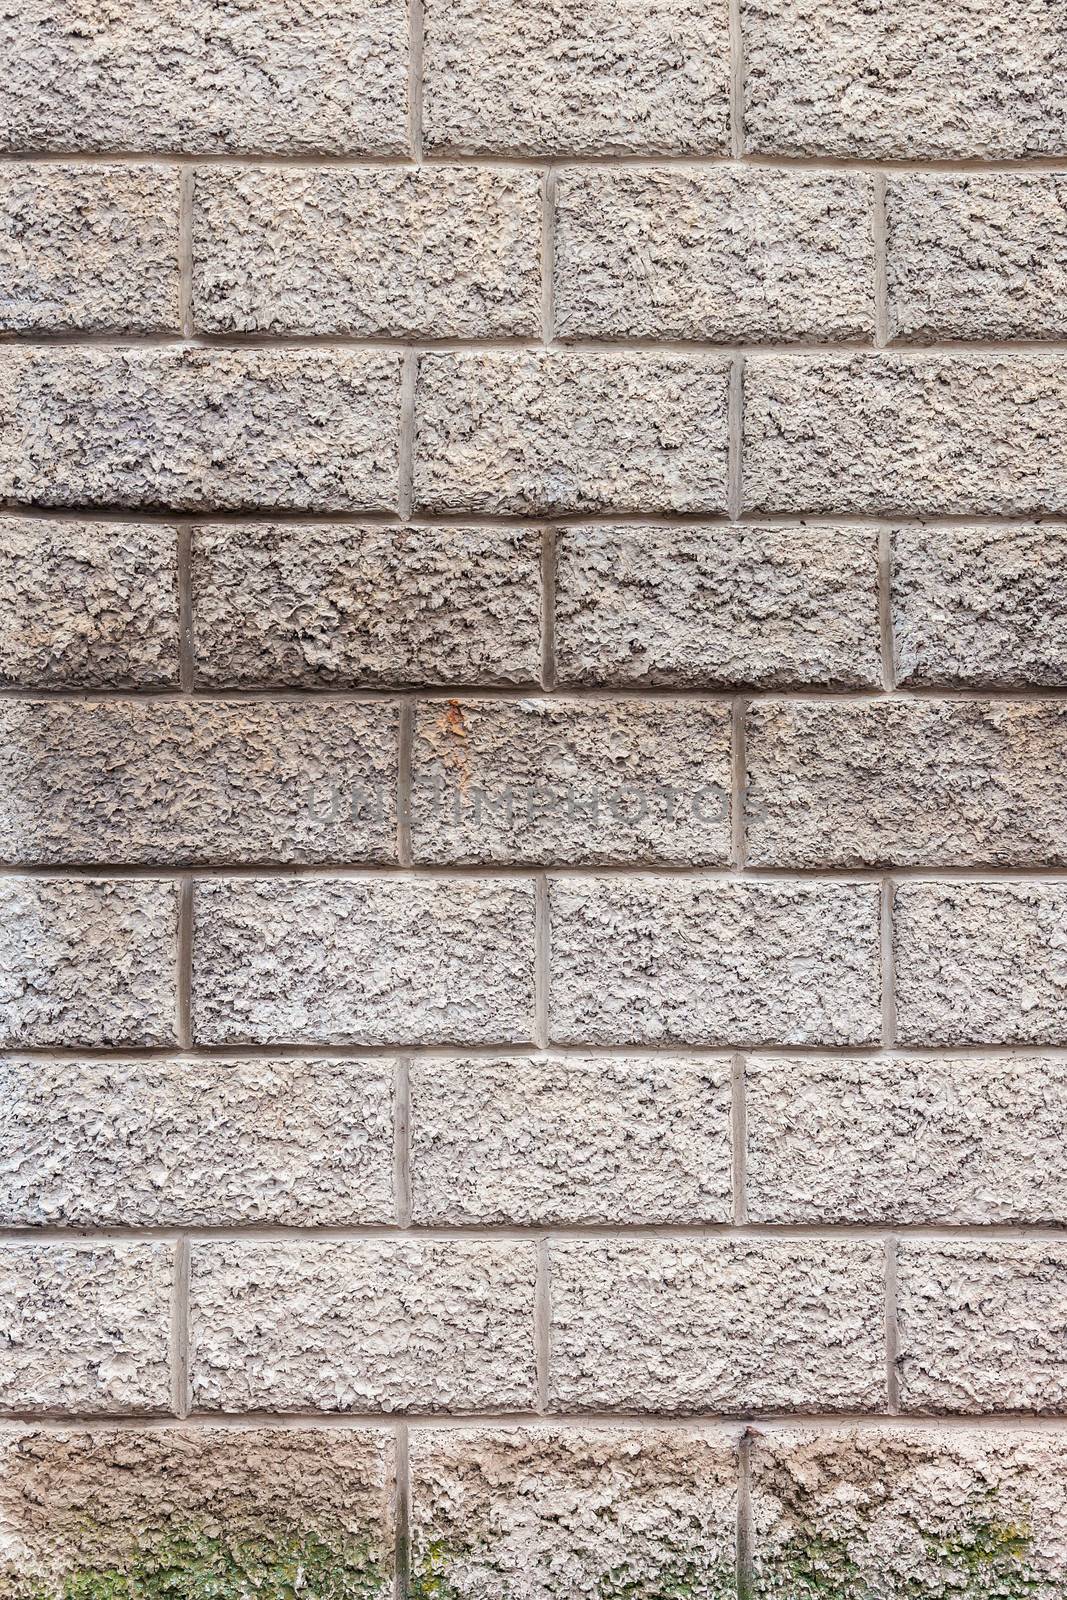 Brick imitation texture by mkos83